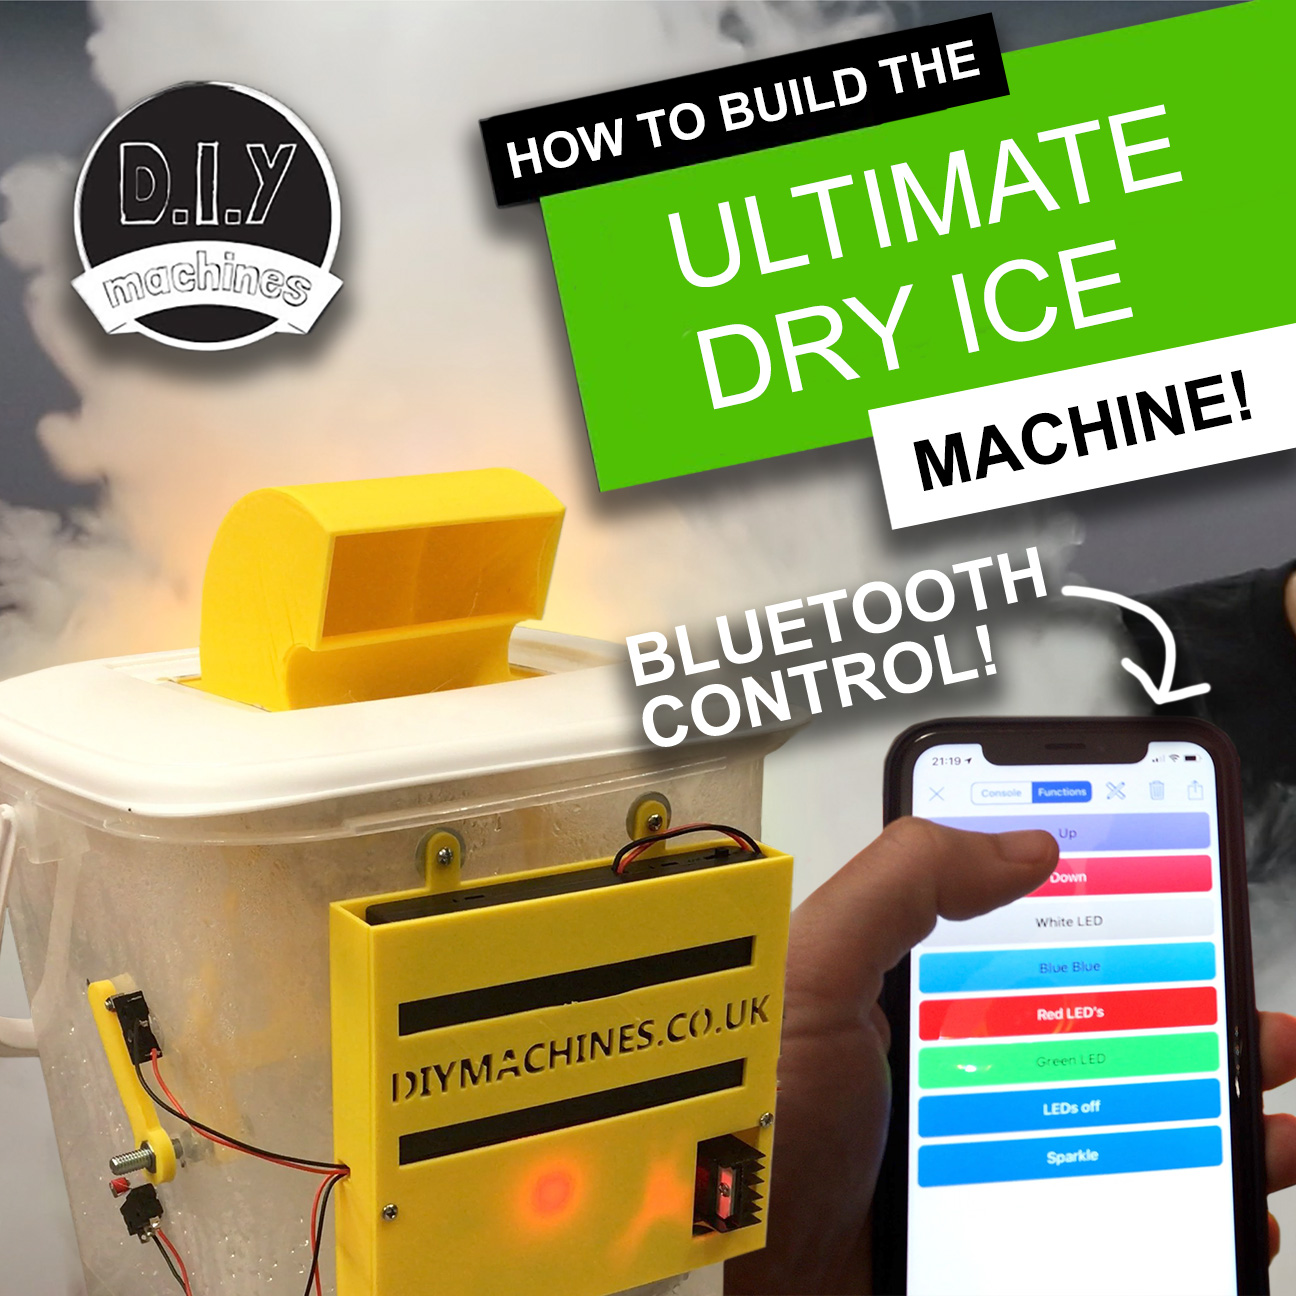 Make the Ultimate Bluetooth Dry Ice Fog Machine